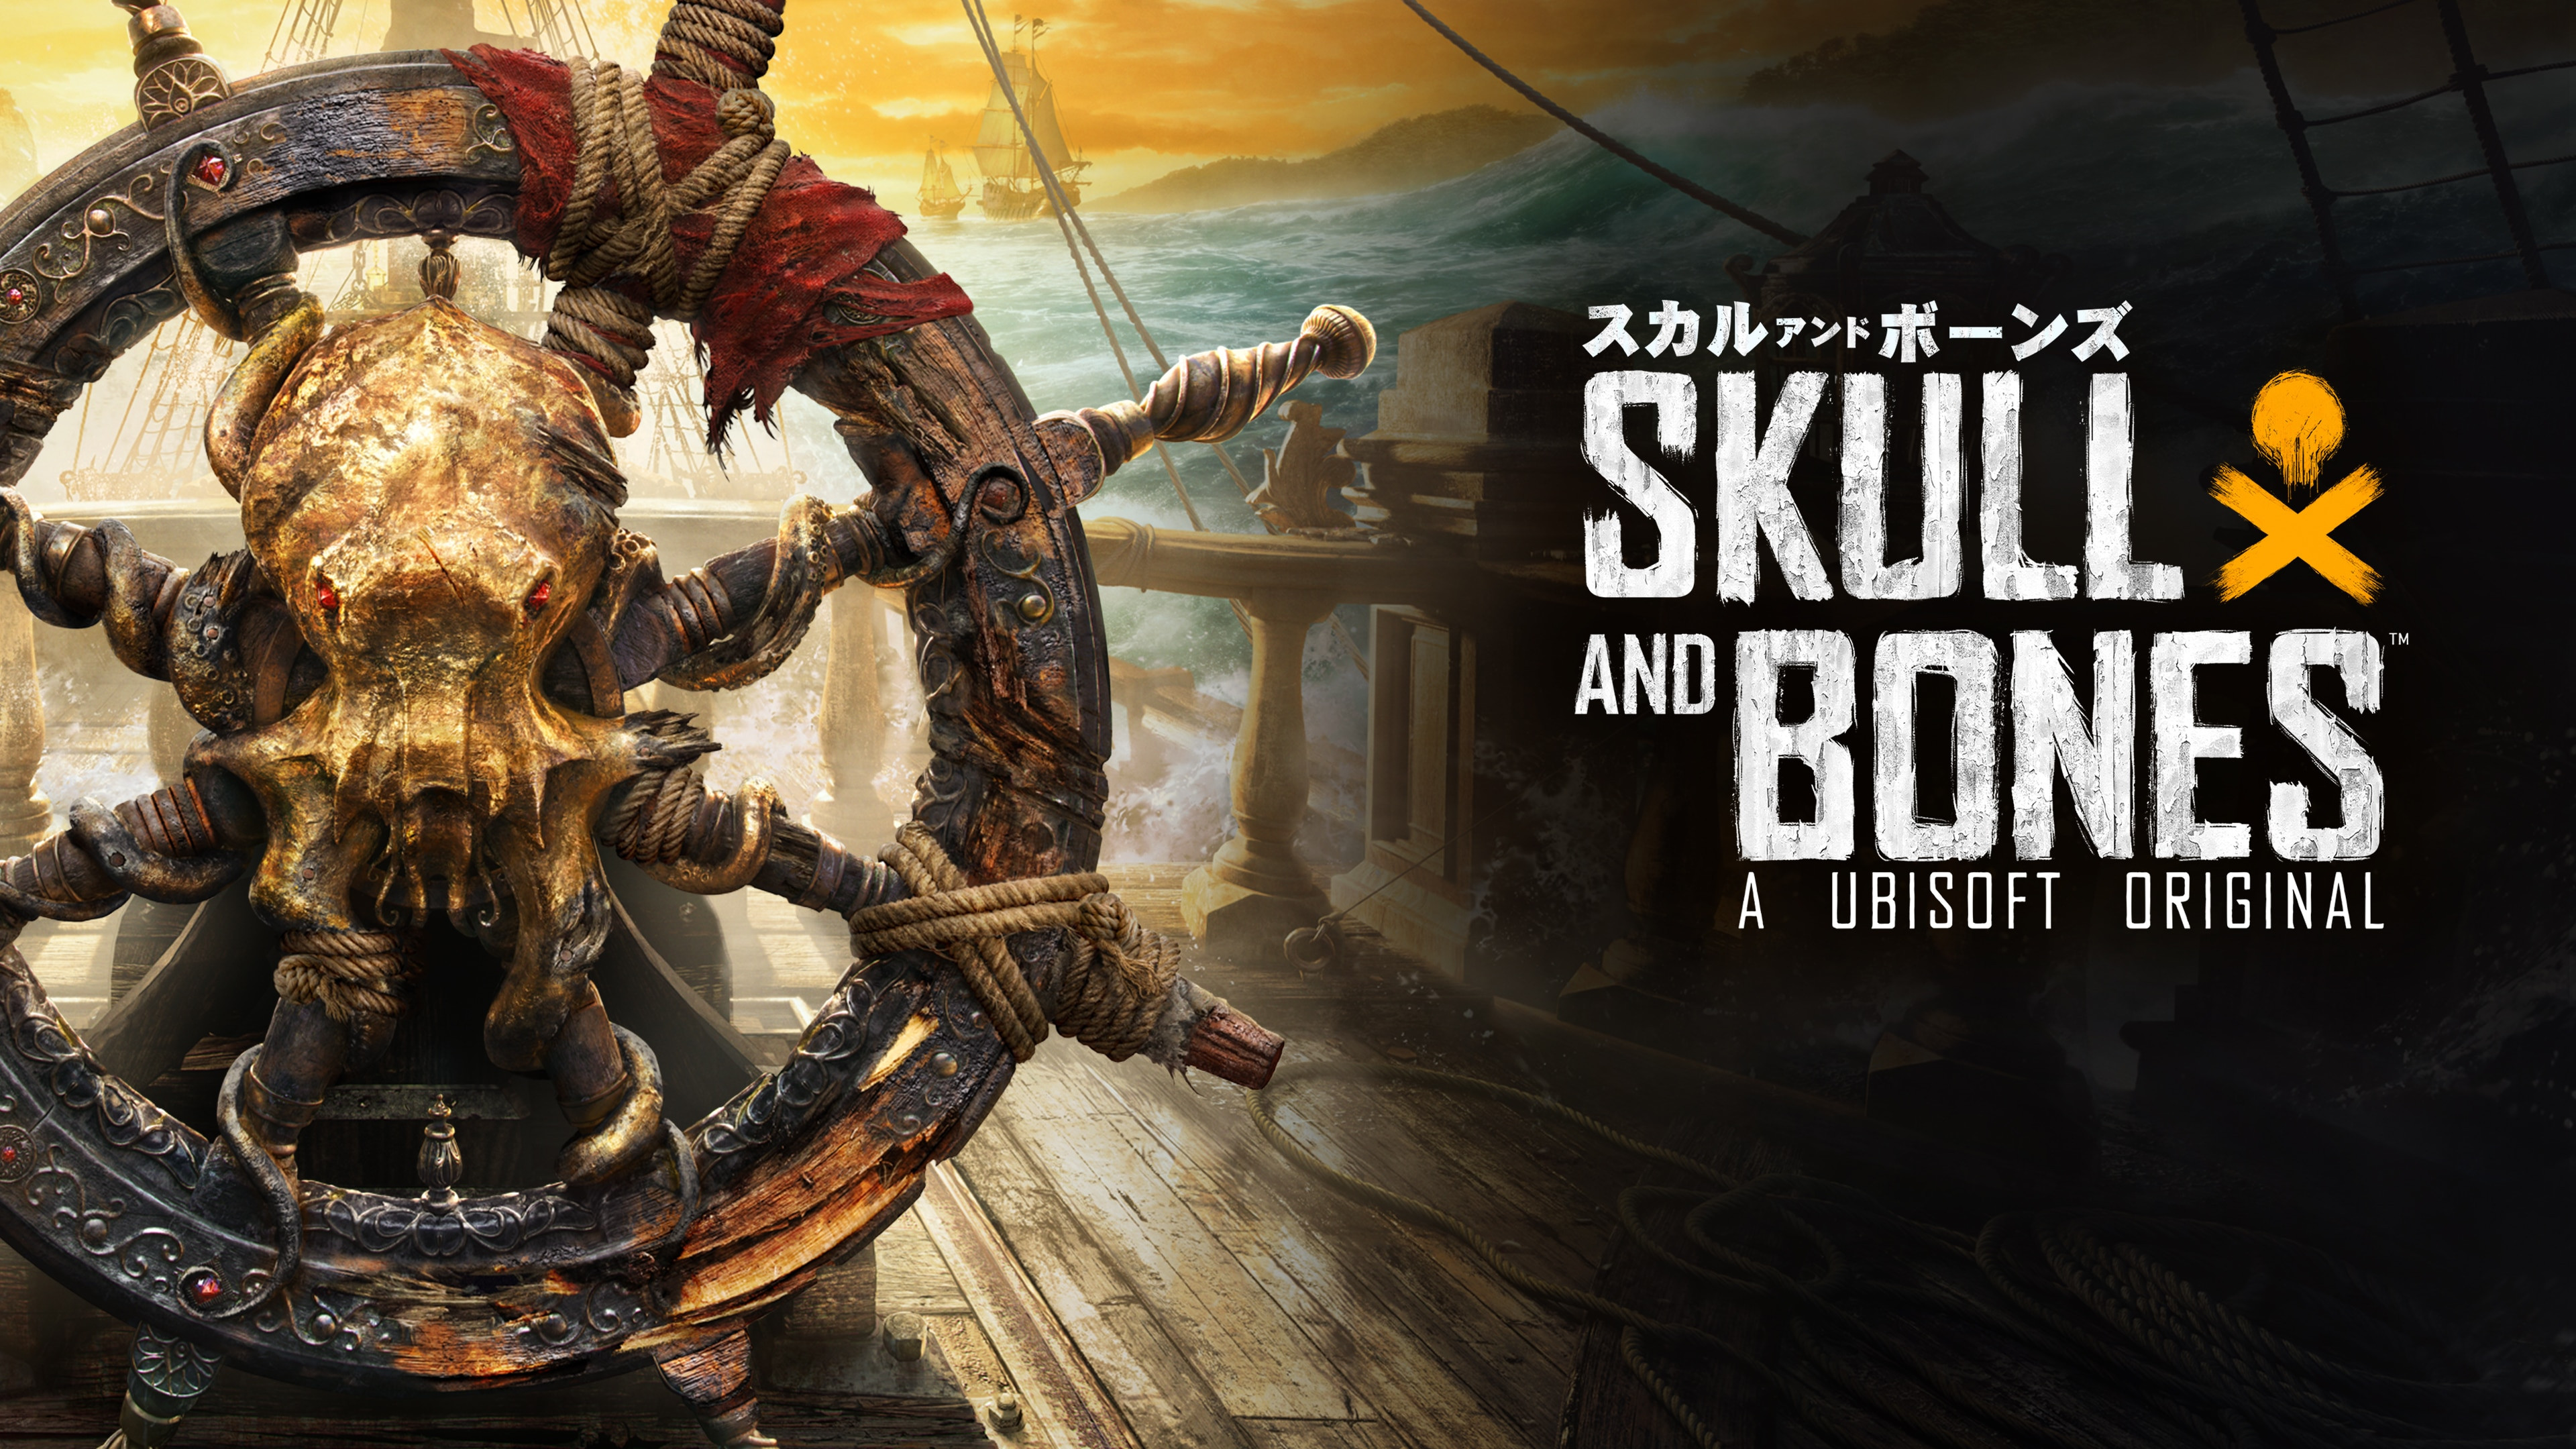 Game of bones. Игра “Skull & Bones” (2020). Skull and Bones игра корабли. Череп и кости игра юбисофт.